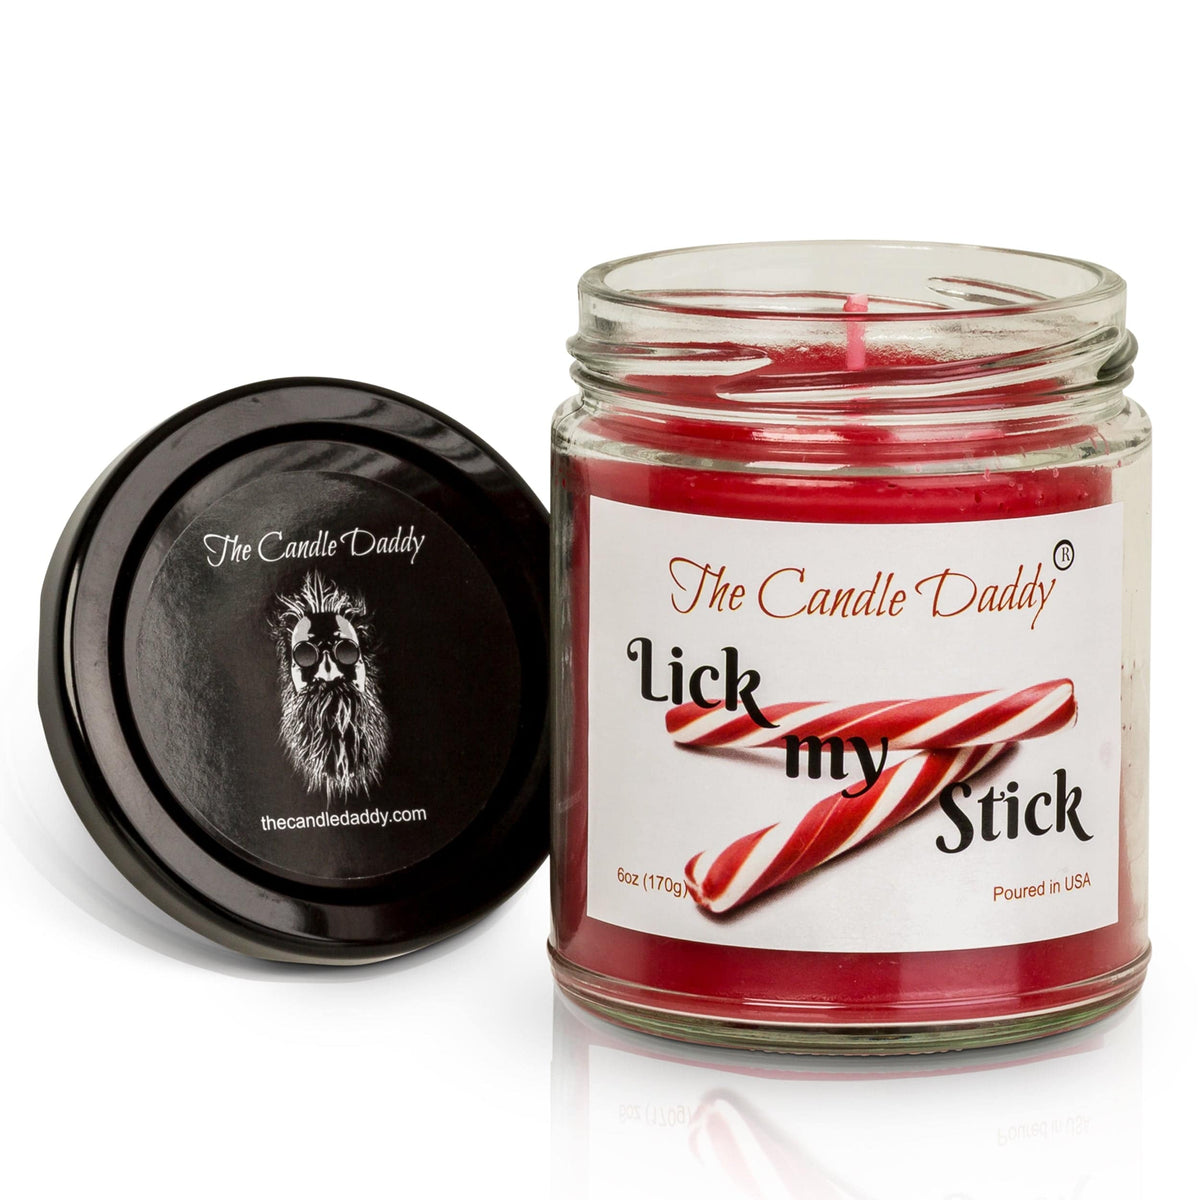 Candy Cane Stud Undies - Wanna Lick My Stick – LindasGifts